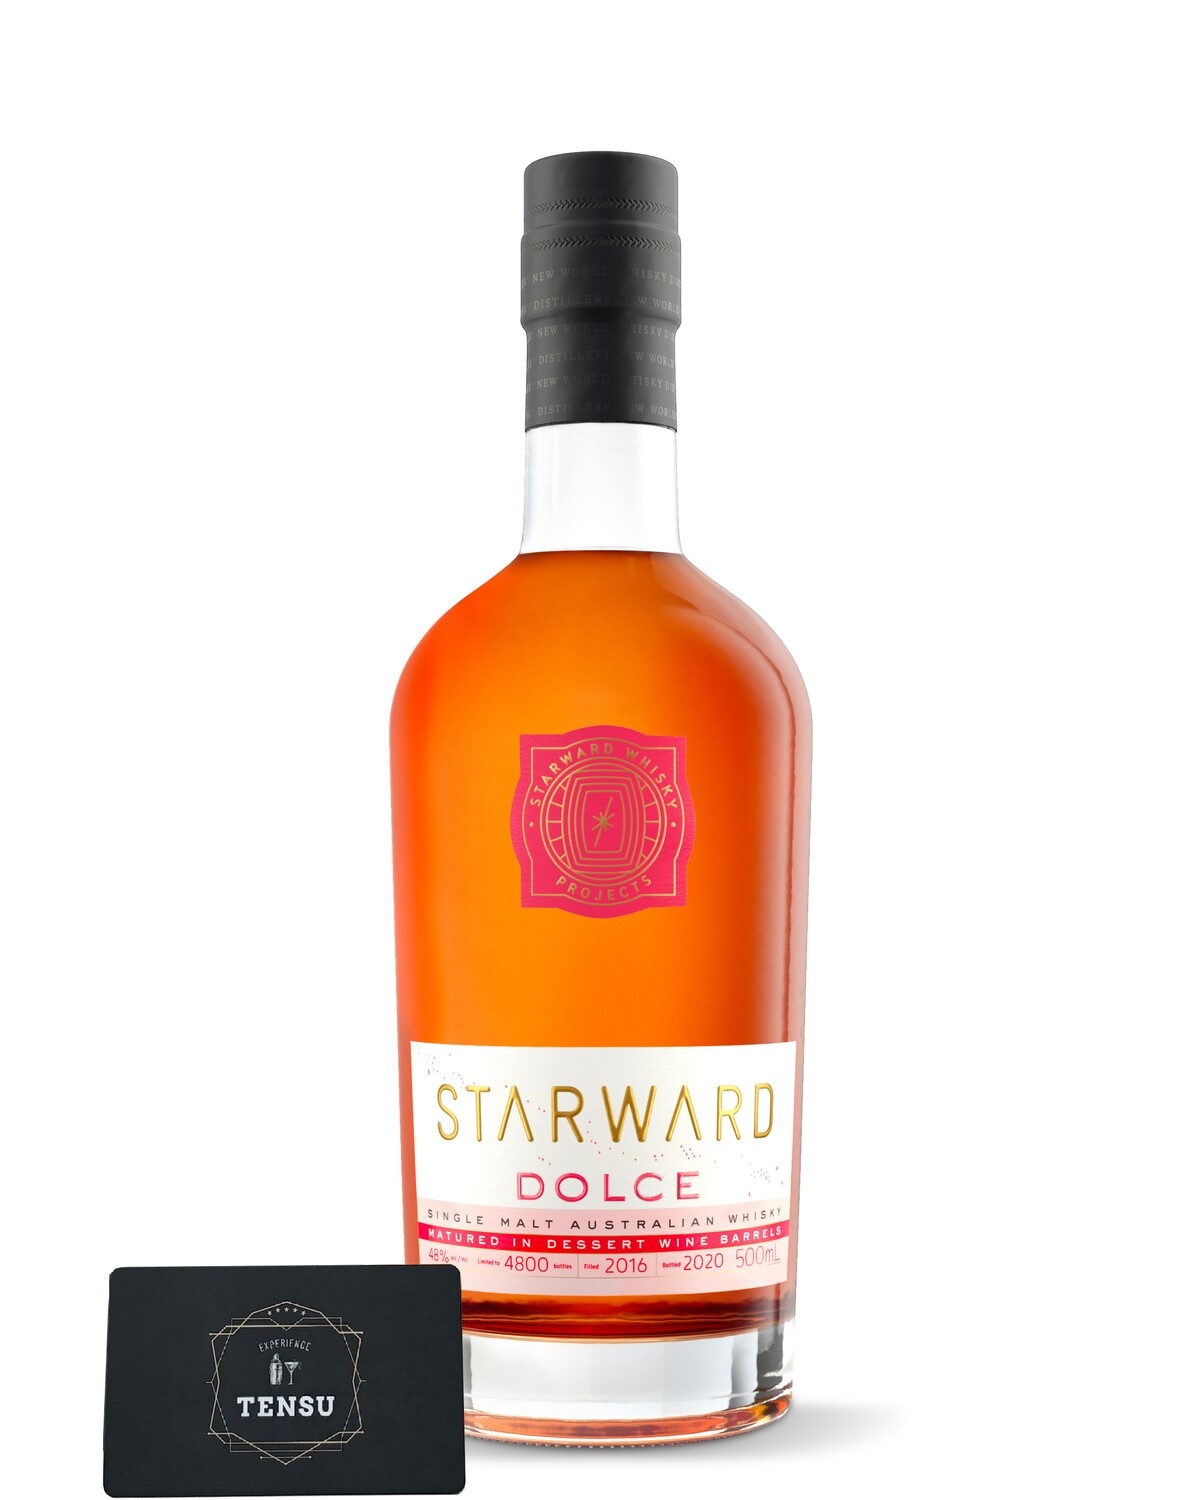 Starward Dolce - Single Malt Australian Whisky (2016-2020) 48,0 "OB"